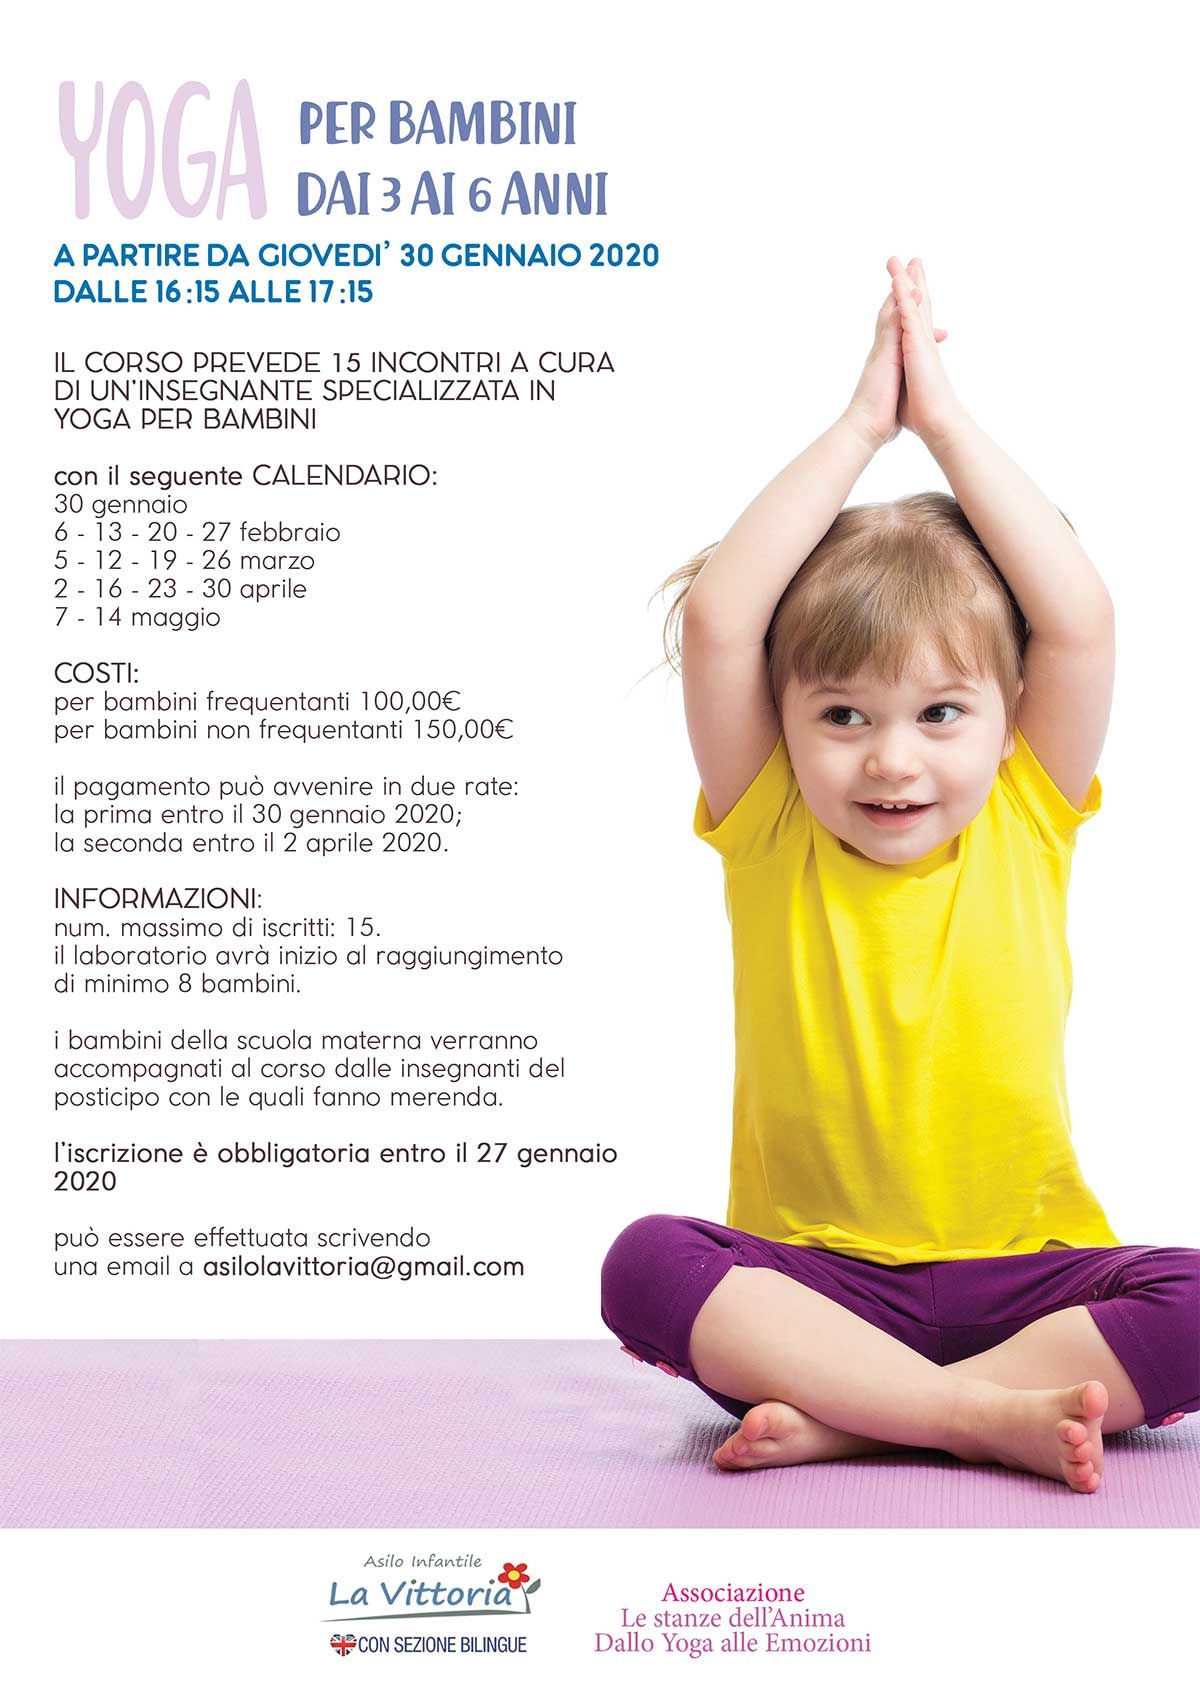 yoga-per-bambini-asilo-vittoria-gennaio-2020